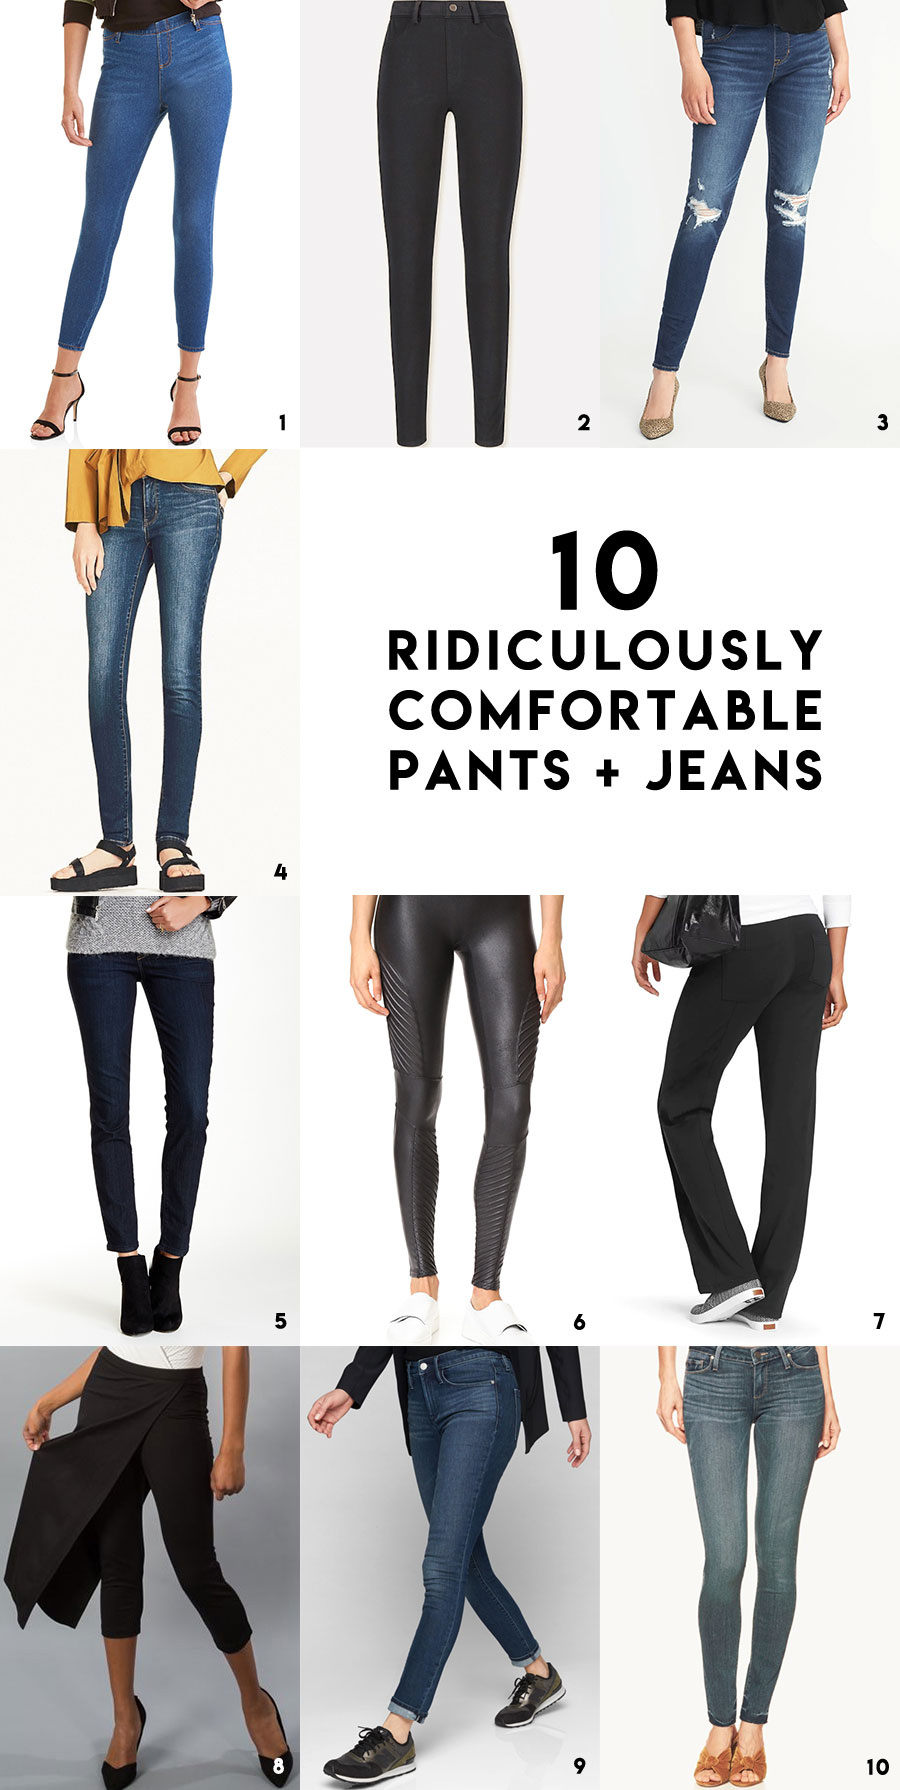 https://images.squarespace-cdn.com/content/v1/5643e47fe4b0eadf5c68b18b/1515082032224-MALFKMS3ZOQ0JTSFQ1K4/most-comfortable-pants-jeans.jpg